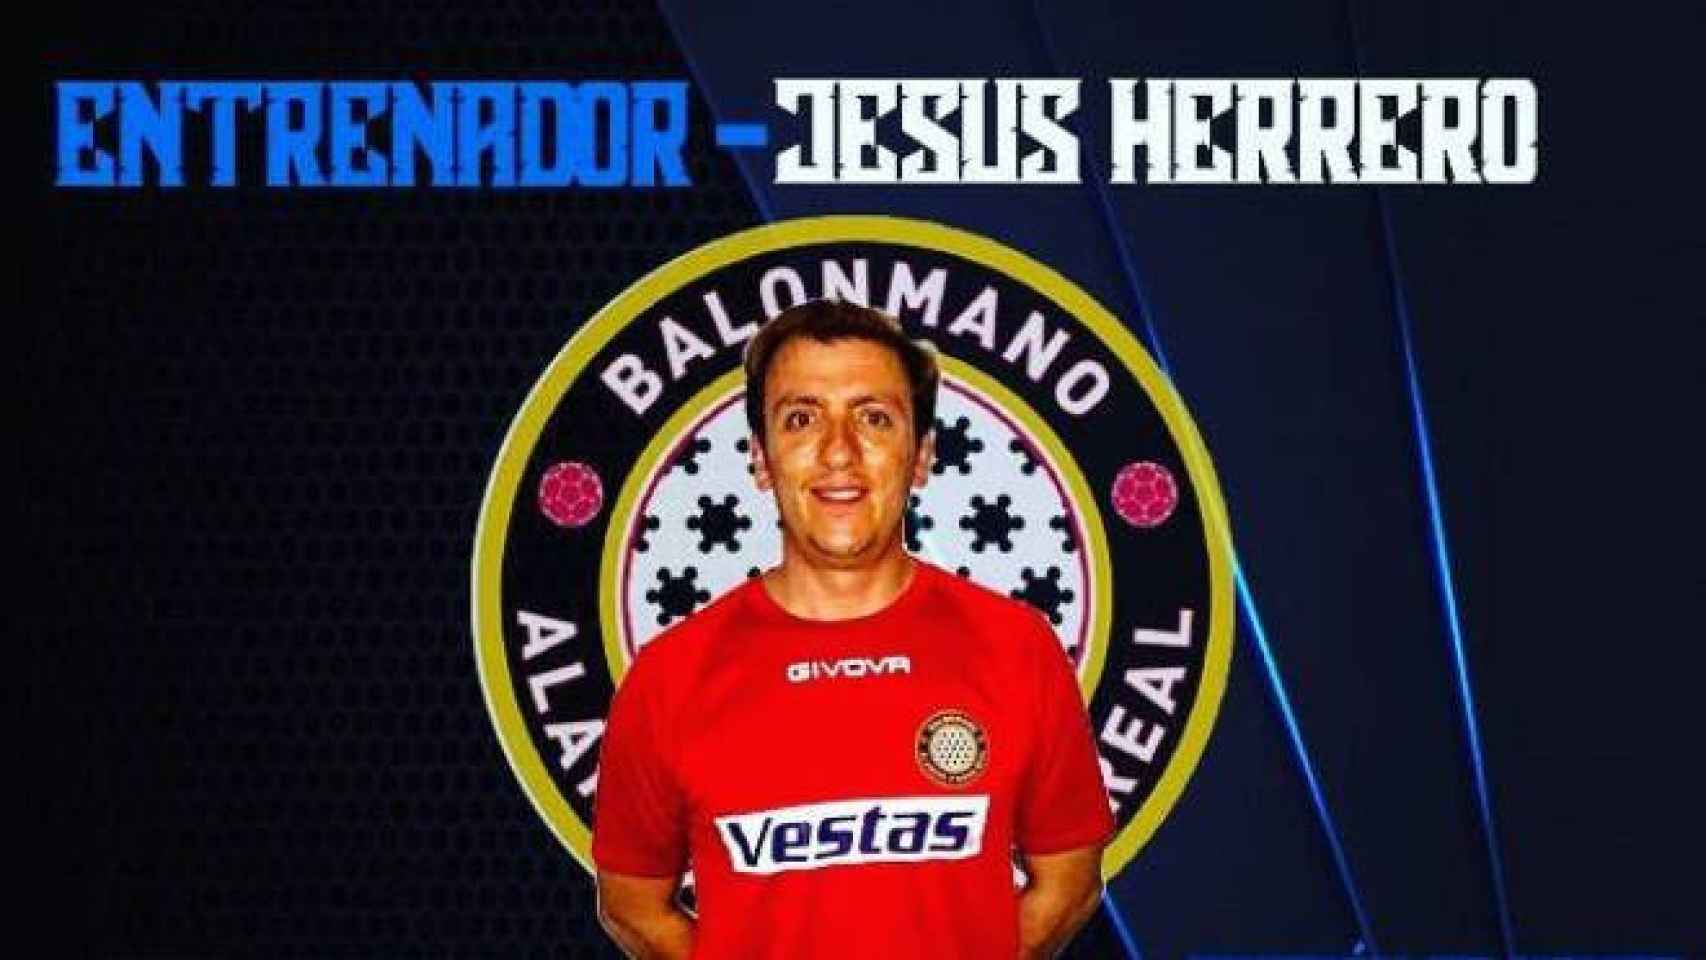 Jesús Herrero